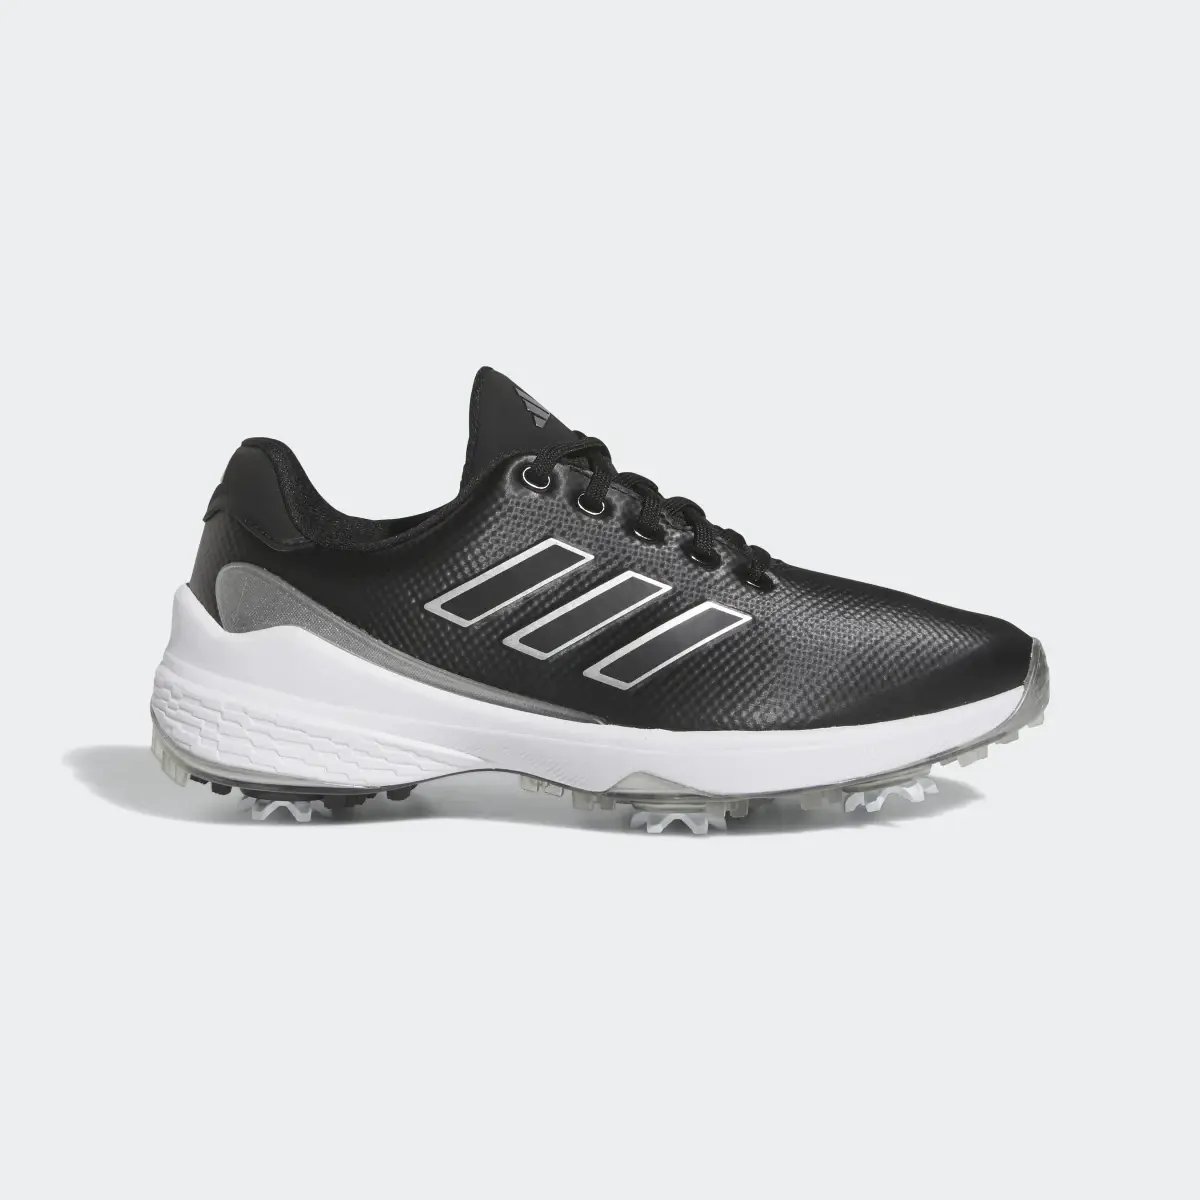 Adidas ZG23 Lightstrike Golf Shoes. 2